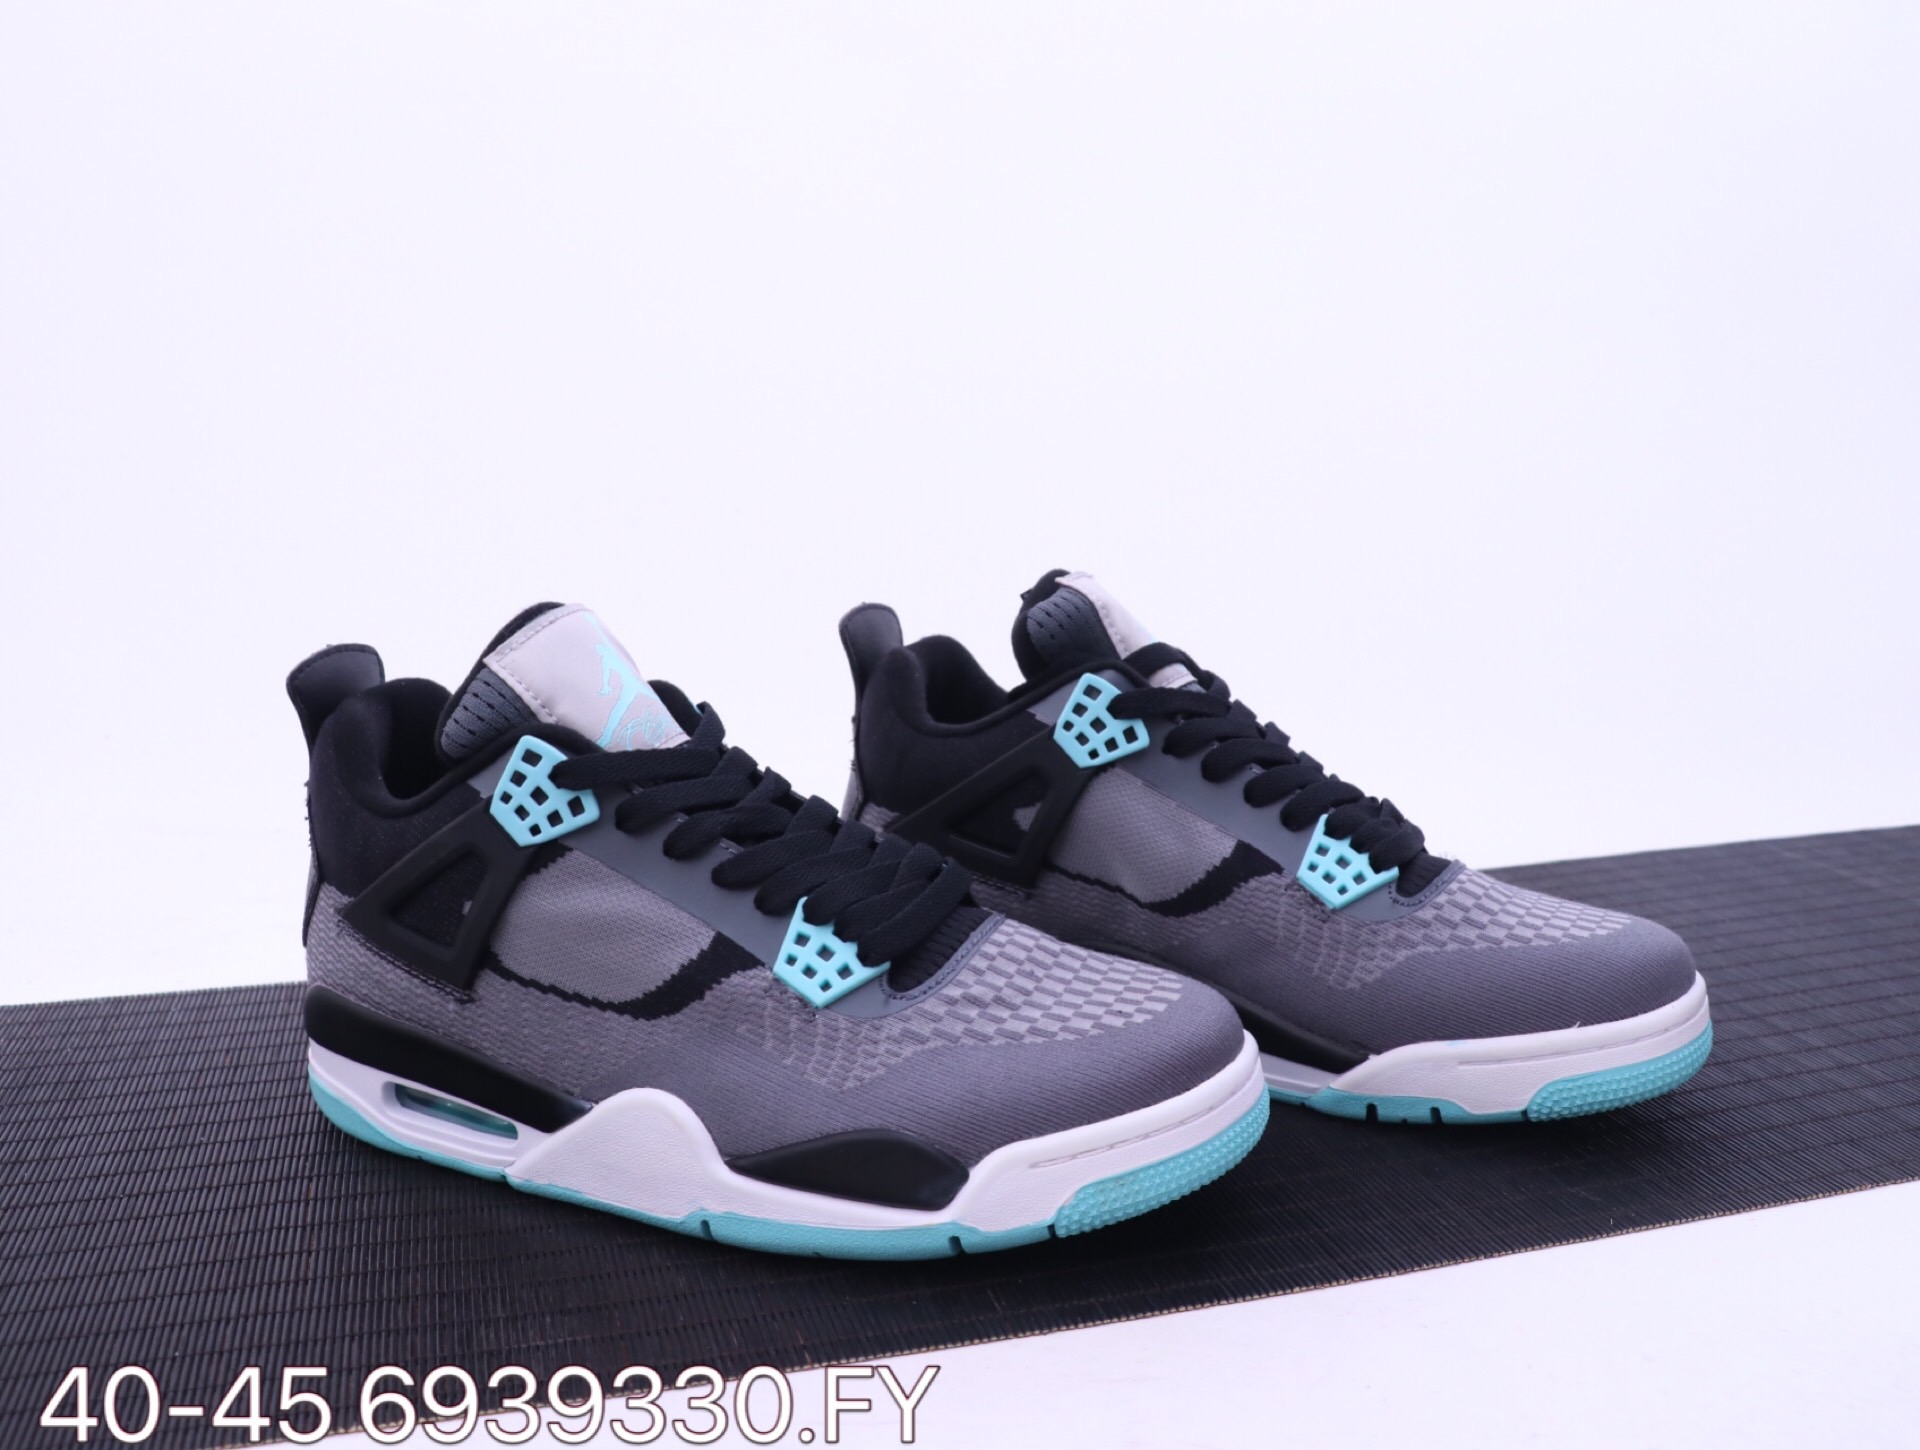 Air Jordan 4 Retro NRG Grey Black Jade Shoes